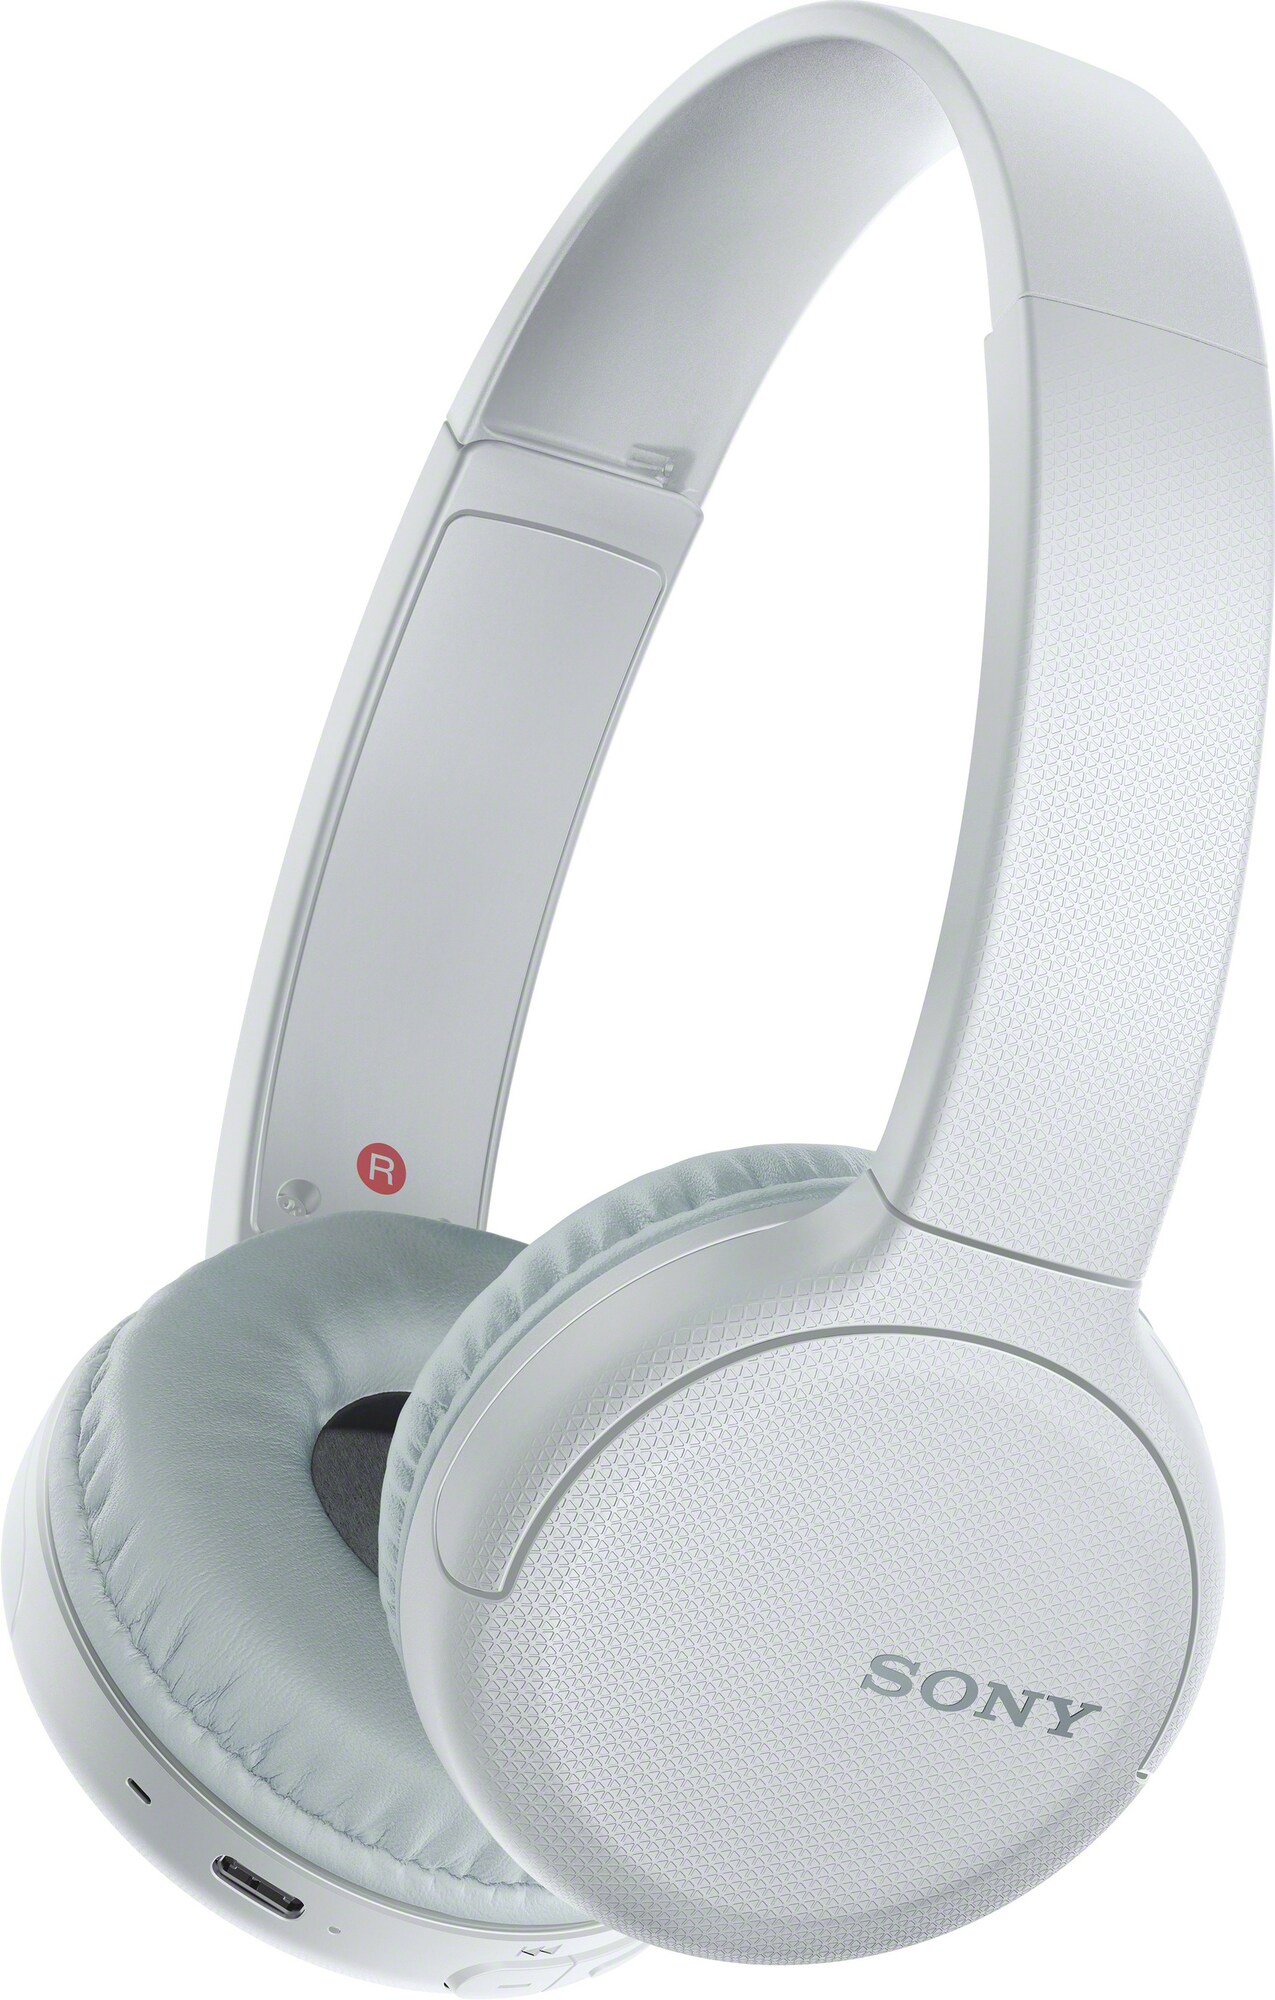 Sony WH-CH510 trådlösa on ear-hörlurar (vita) - Hörlurar - Elgiganten